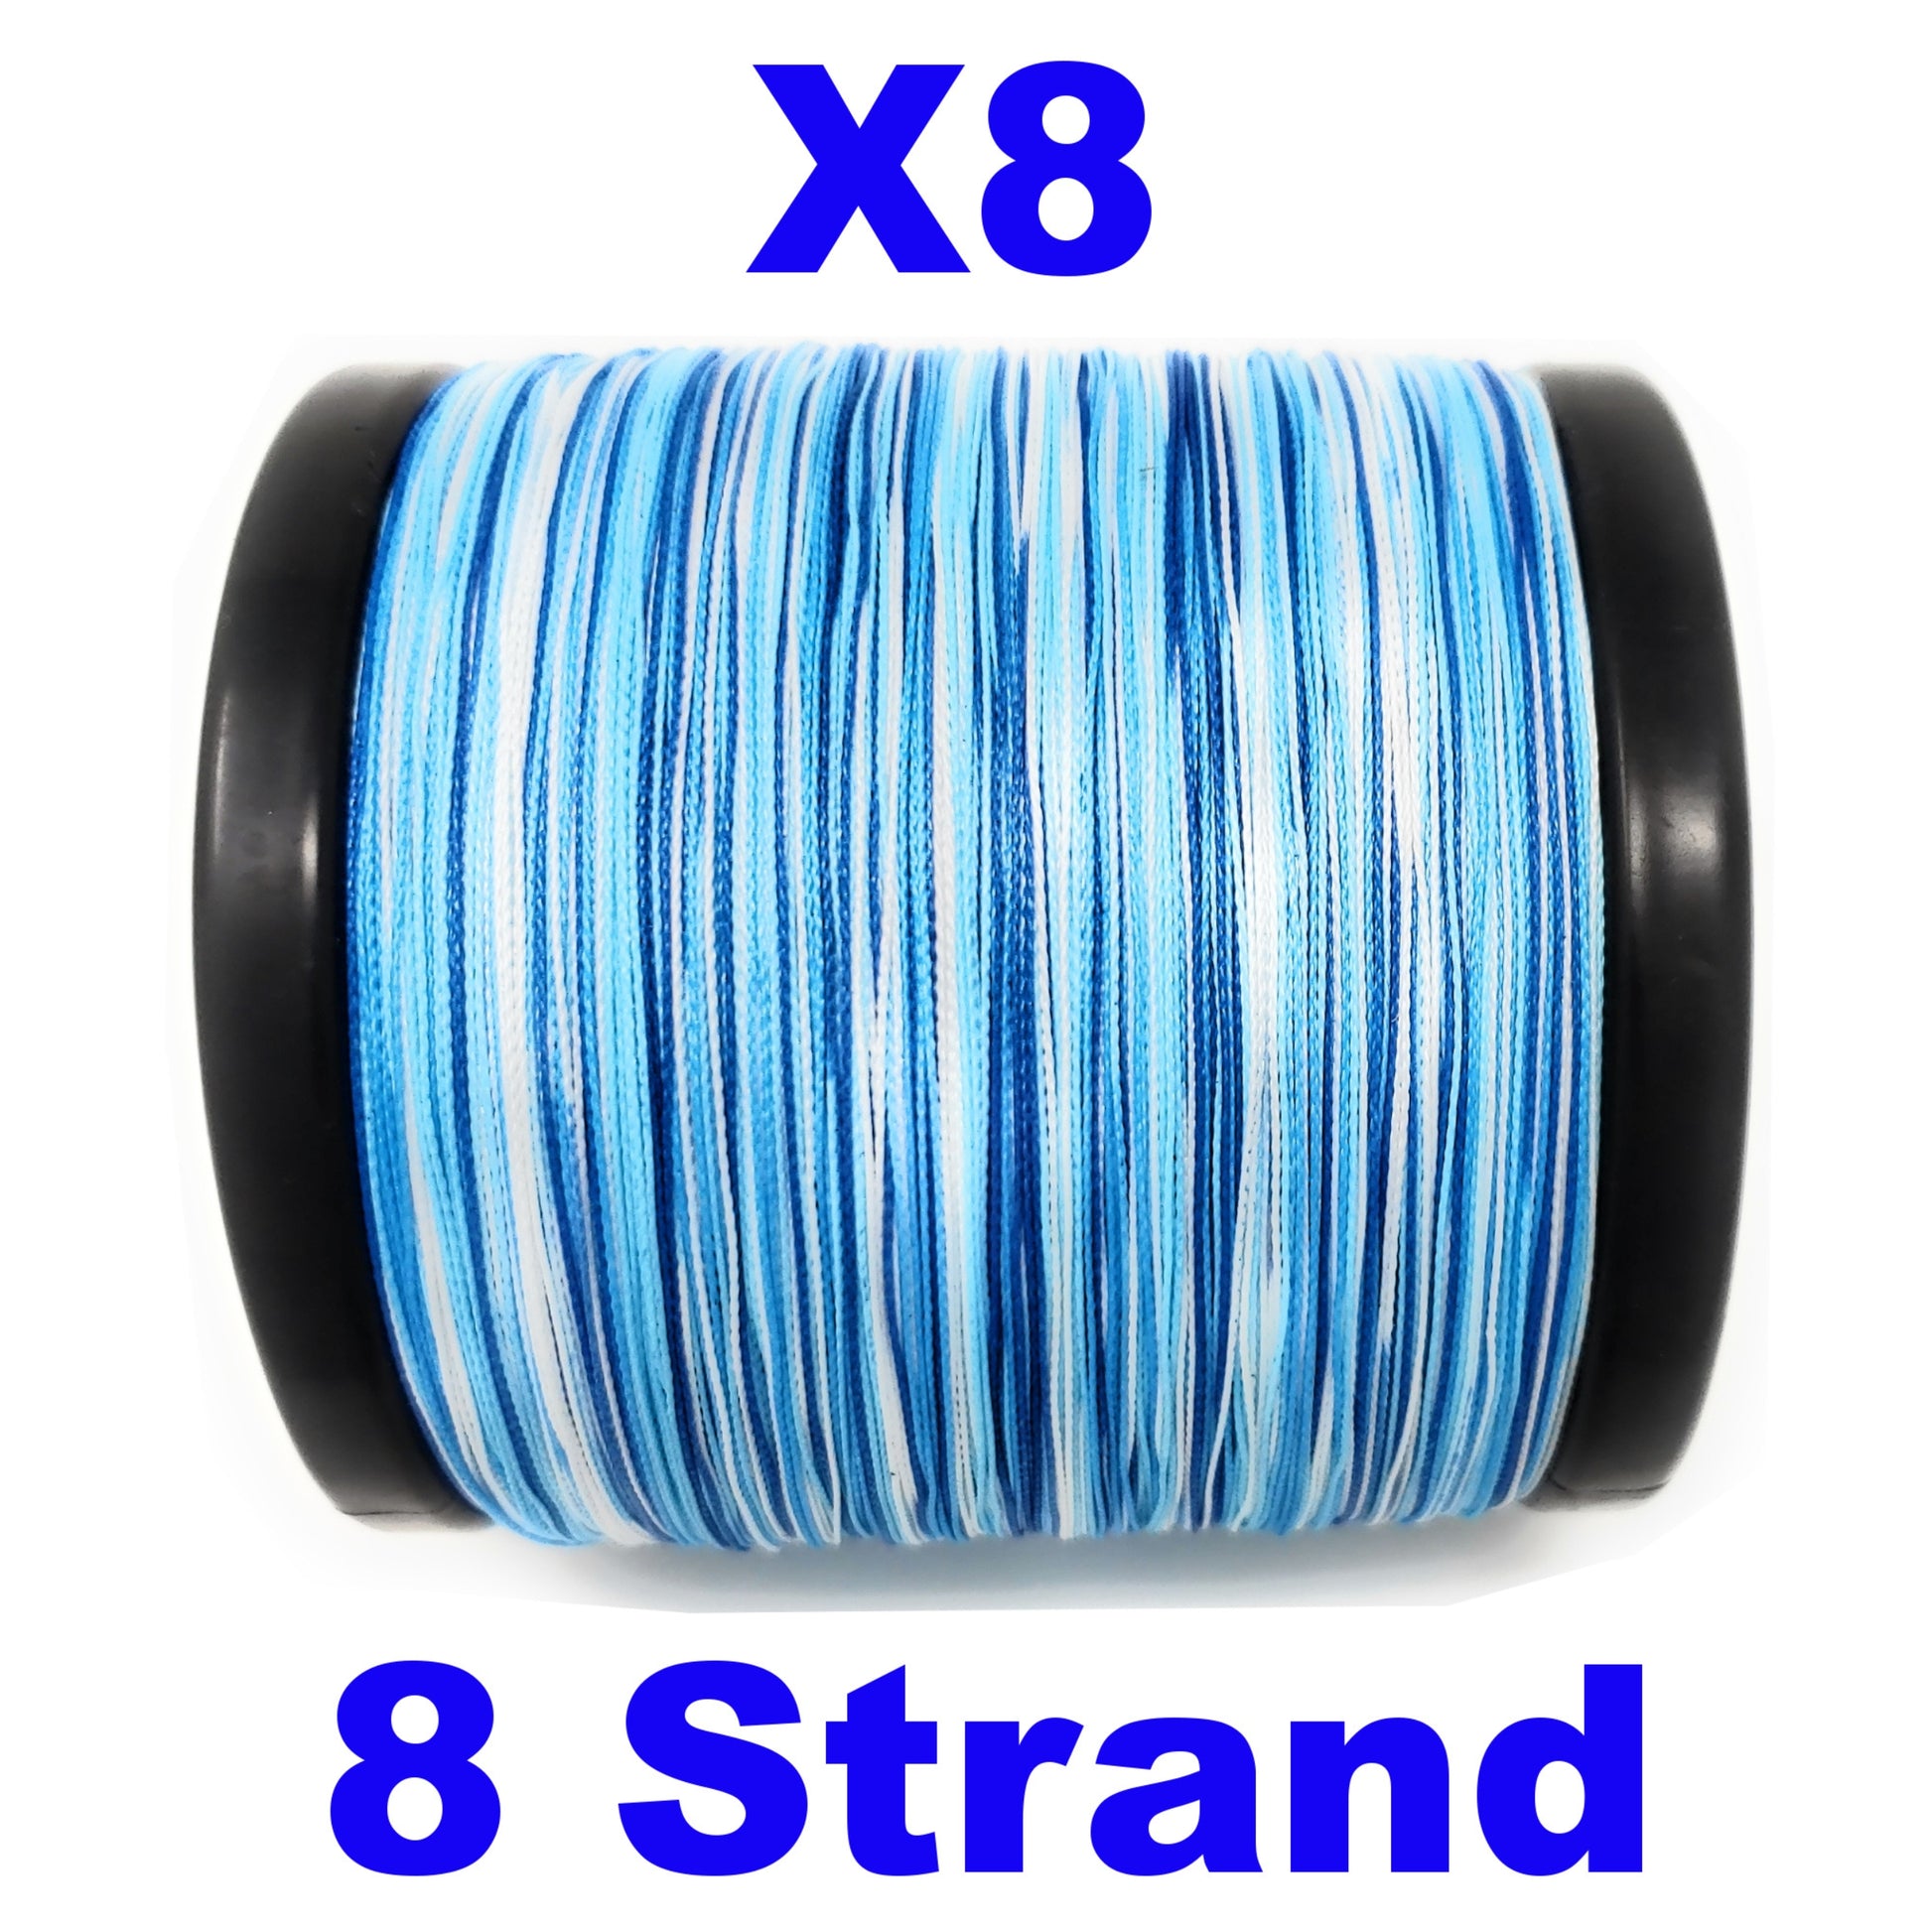 8X Series - Ultra Performance 8 Strand Braid